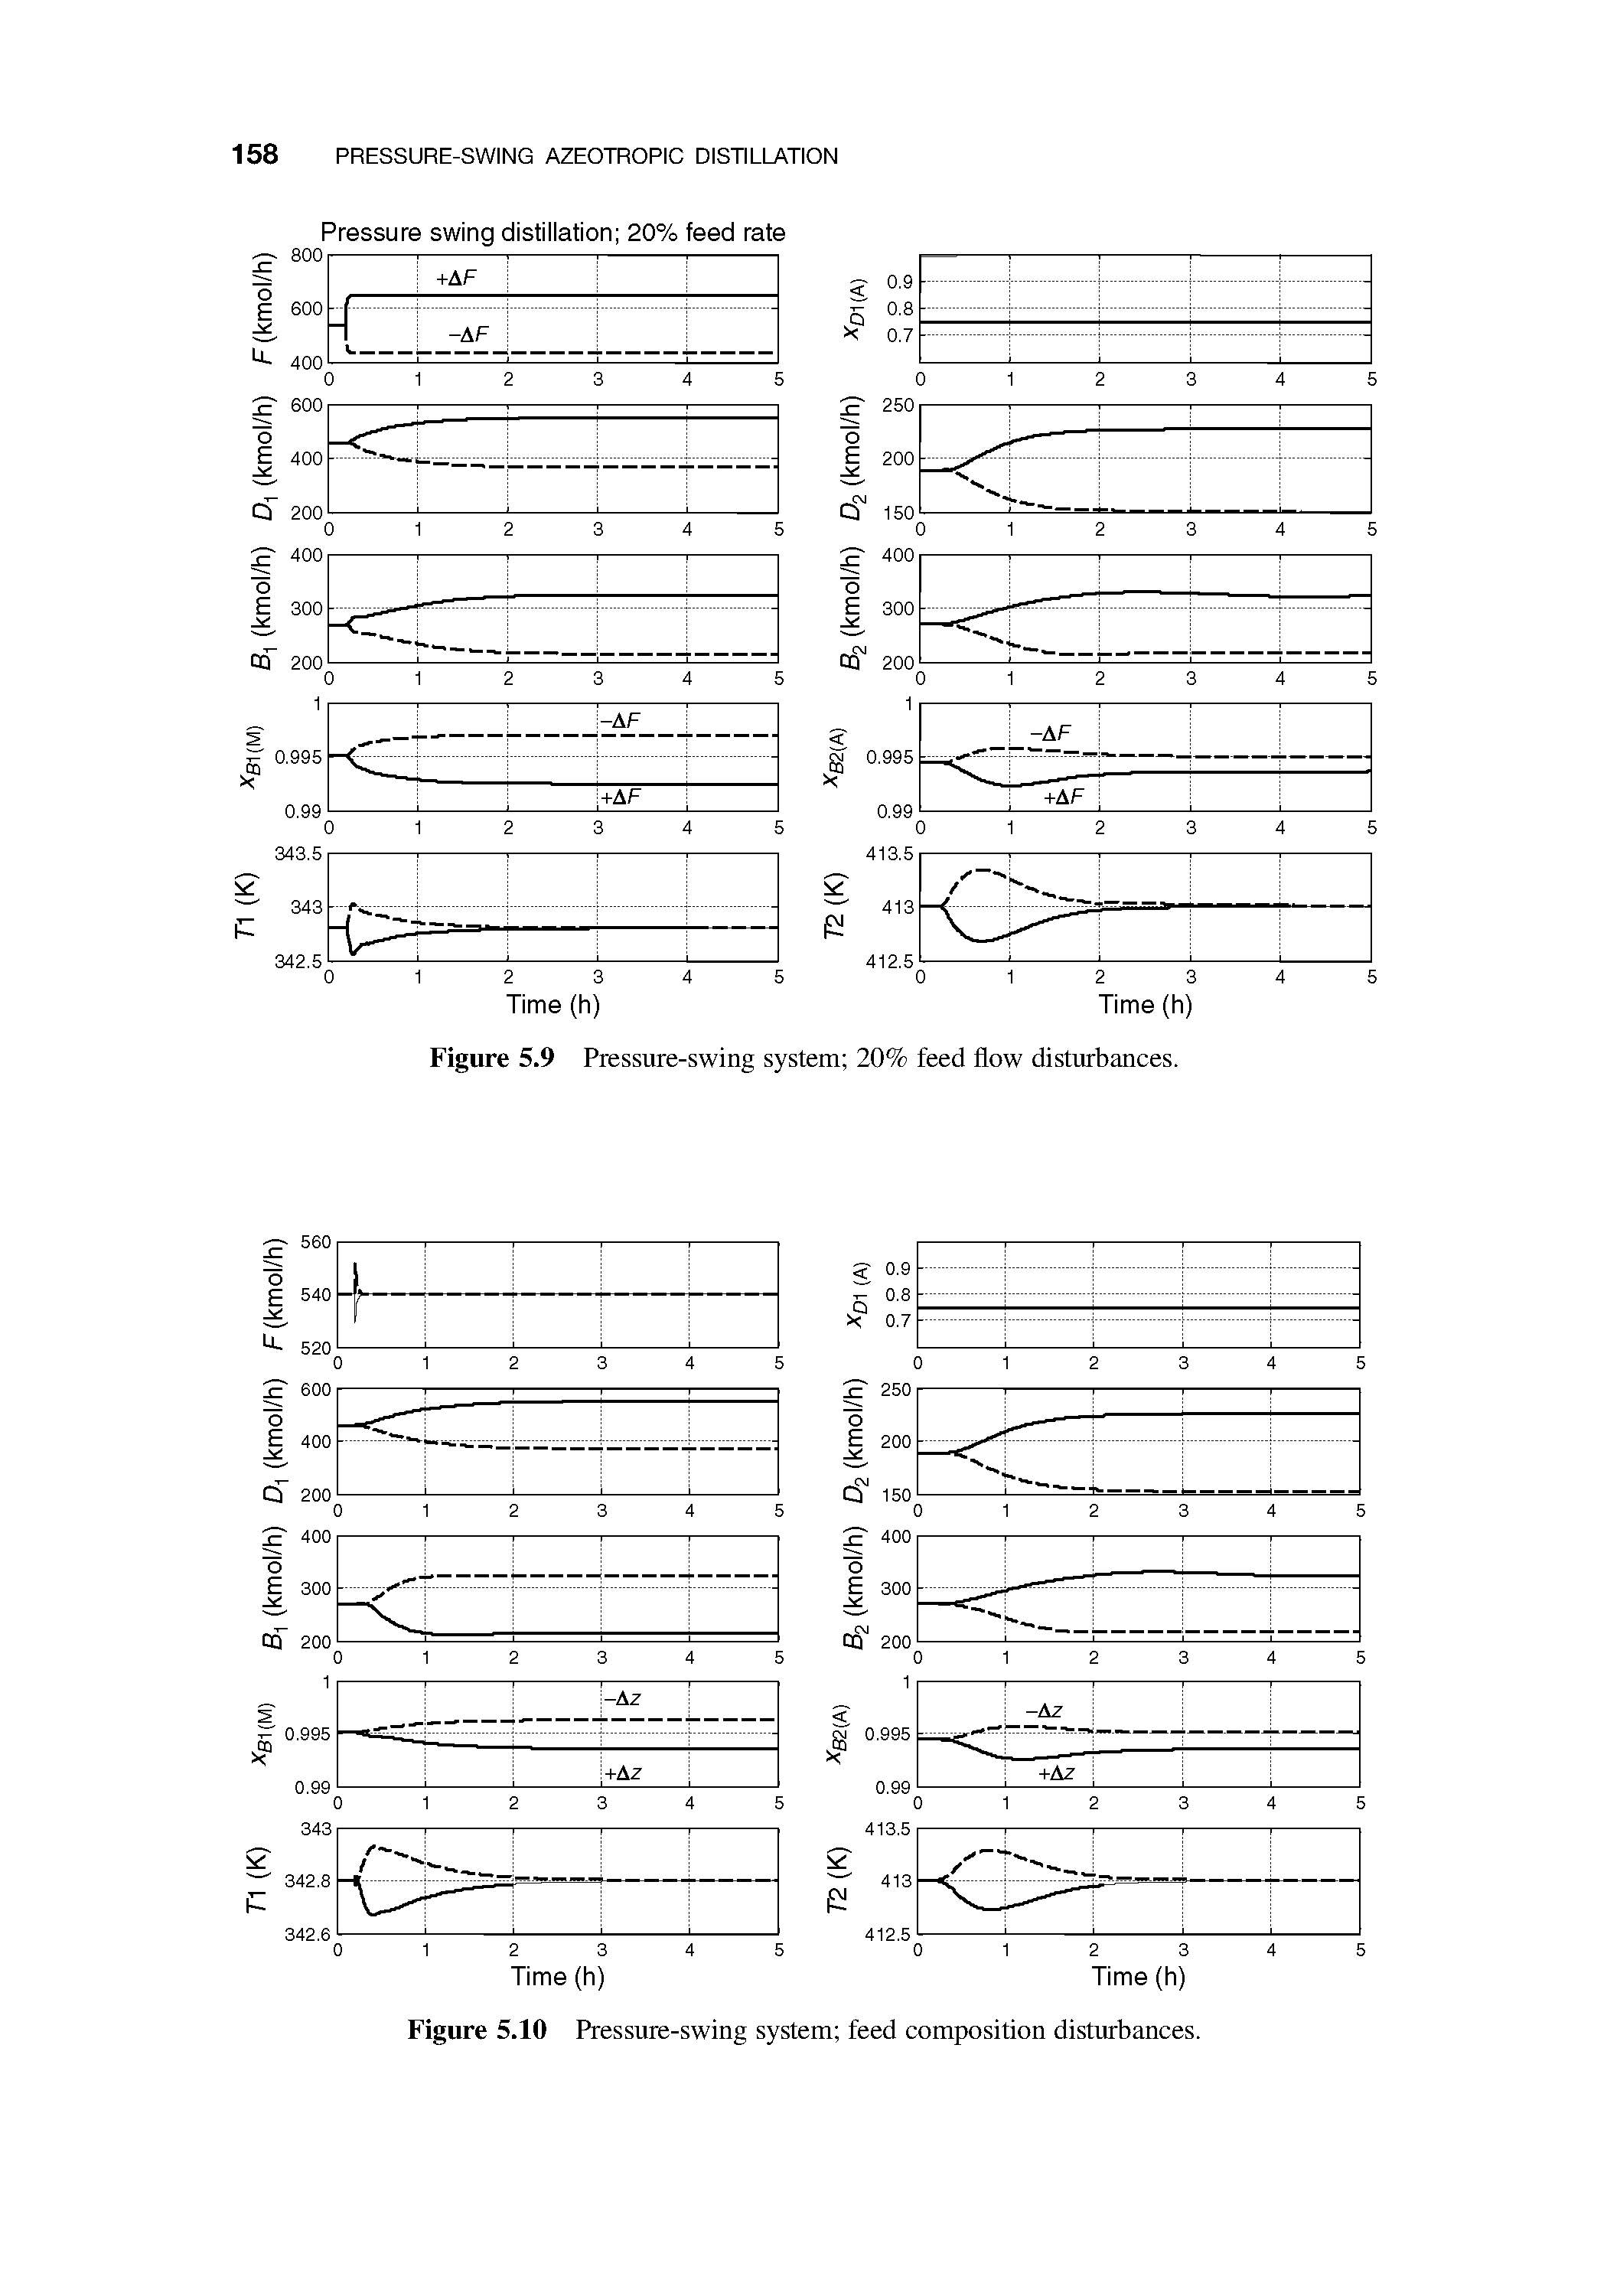 Figure 5.9 Pressure-swing system 20% feed flow disturbances.